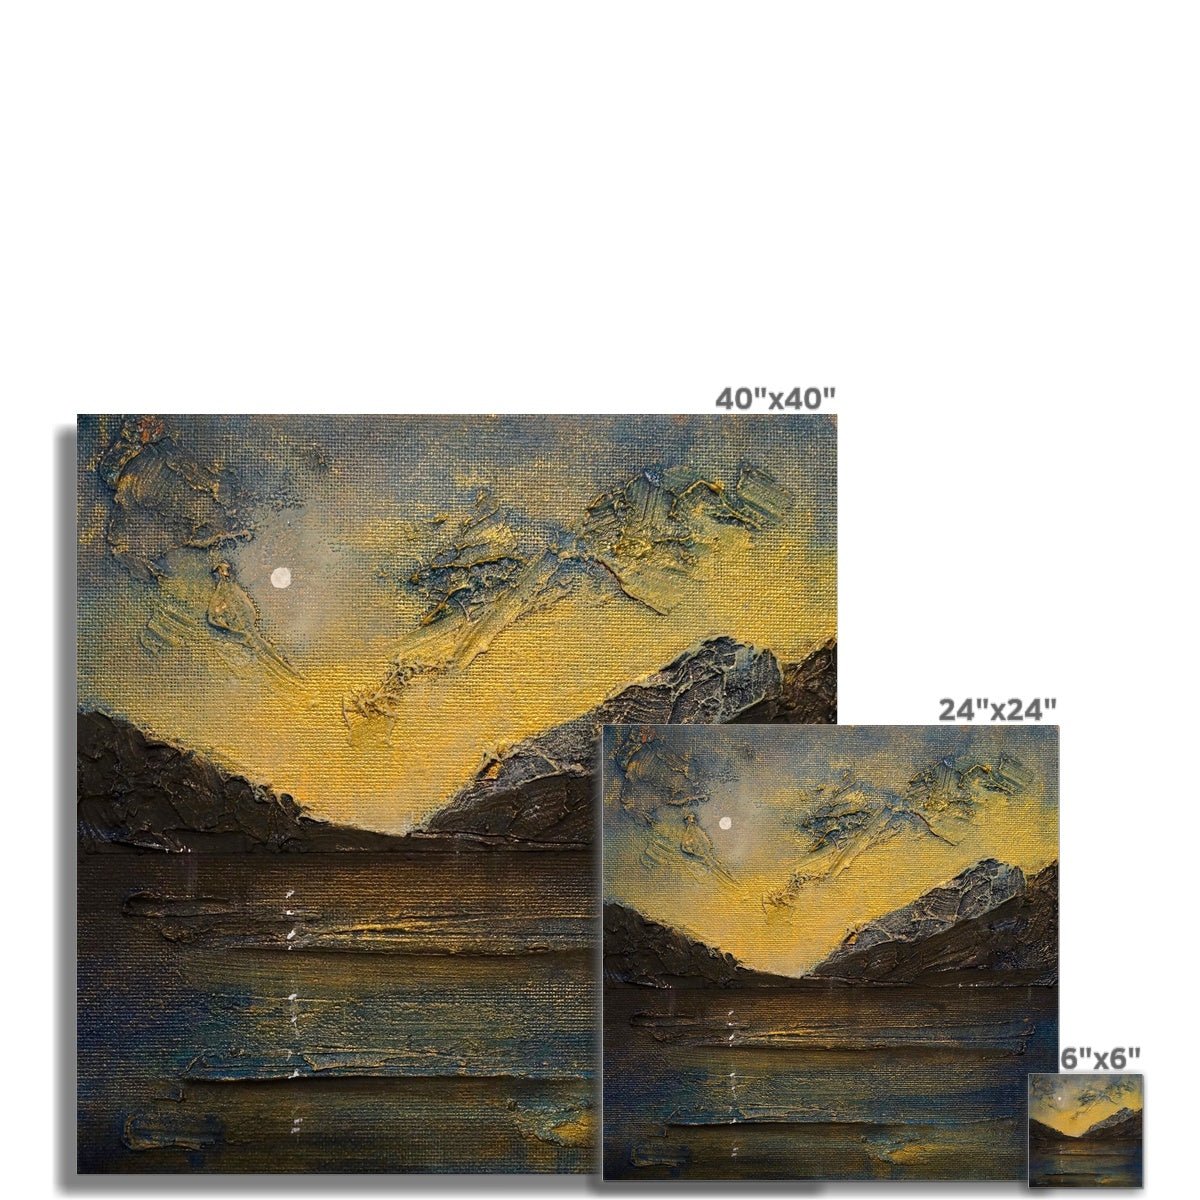 Loch Lomond Moonlight Painting | Fine Art Prints From Scotland-Unframed Prints-Scottish Lochs & Mountains Art Gallery-Paintings, Prints, Homeware, Art Gifts From Scotland By Scottish Artist Kevin Hunter